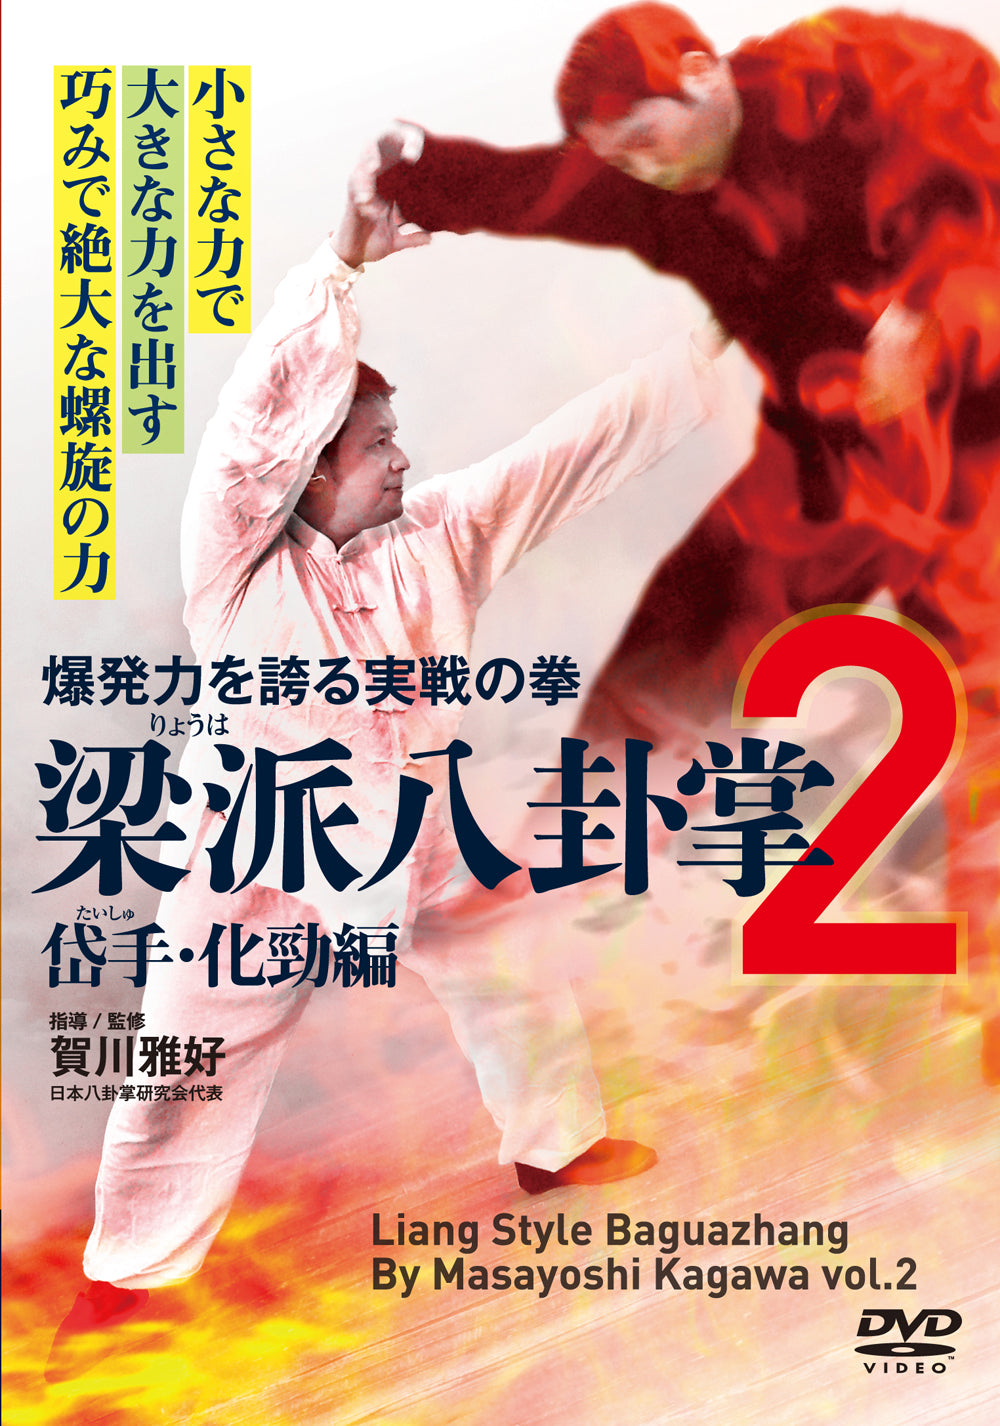 Liang Style Baguazhang Vol 2 DVD by Masayoshi Kagawa - Budovideos Inc